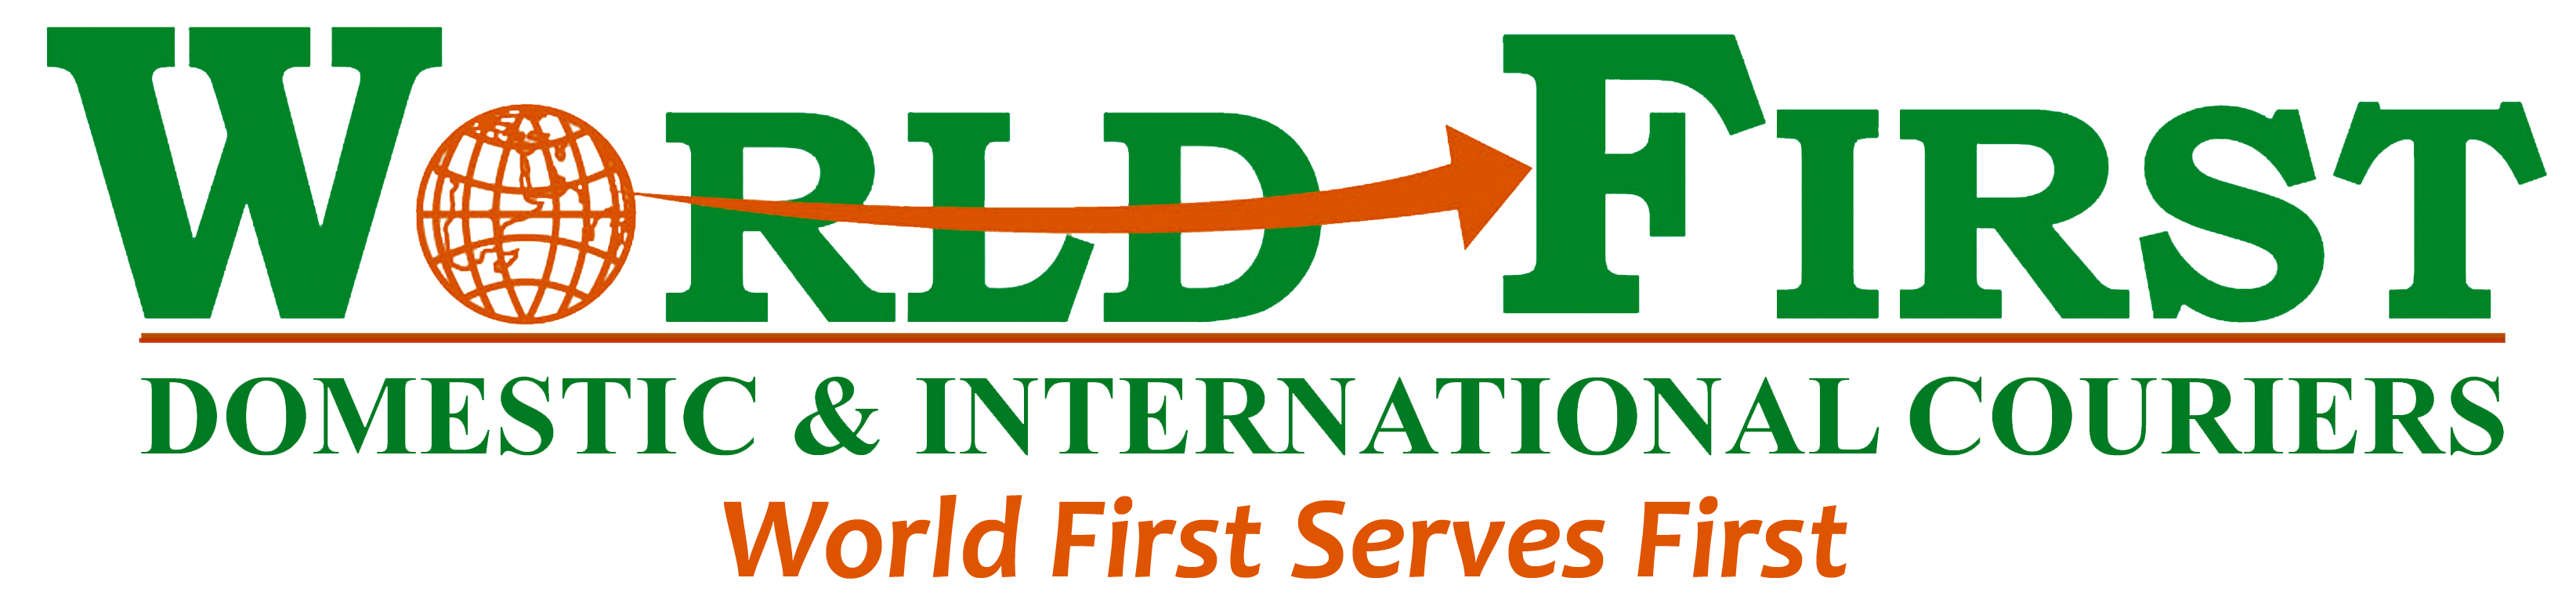 World First International Couriers Logo